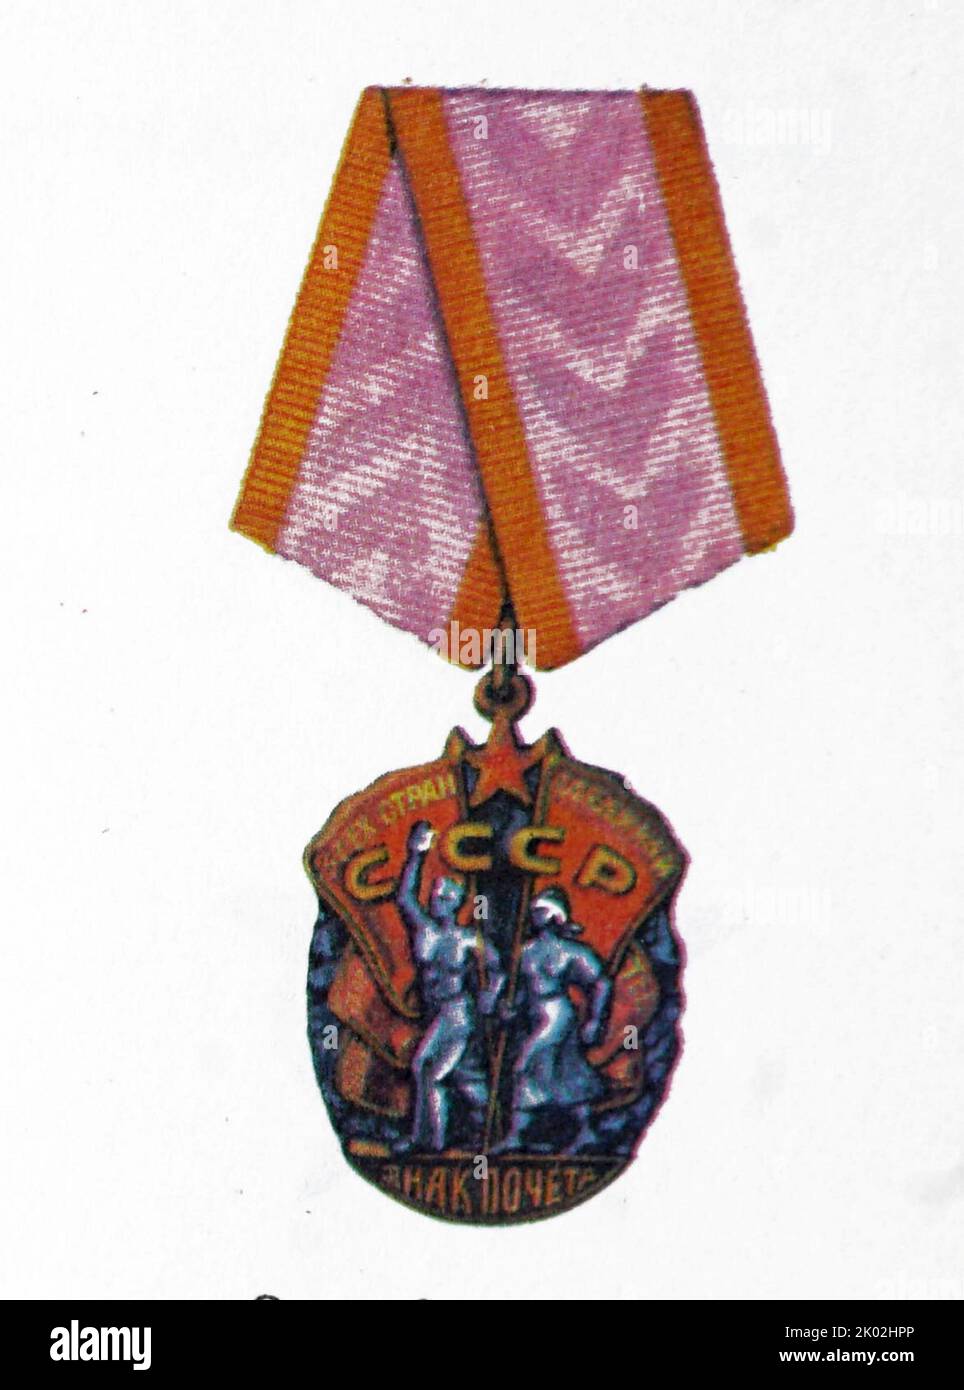 soviet Medal of honor 1945 Stock Photo